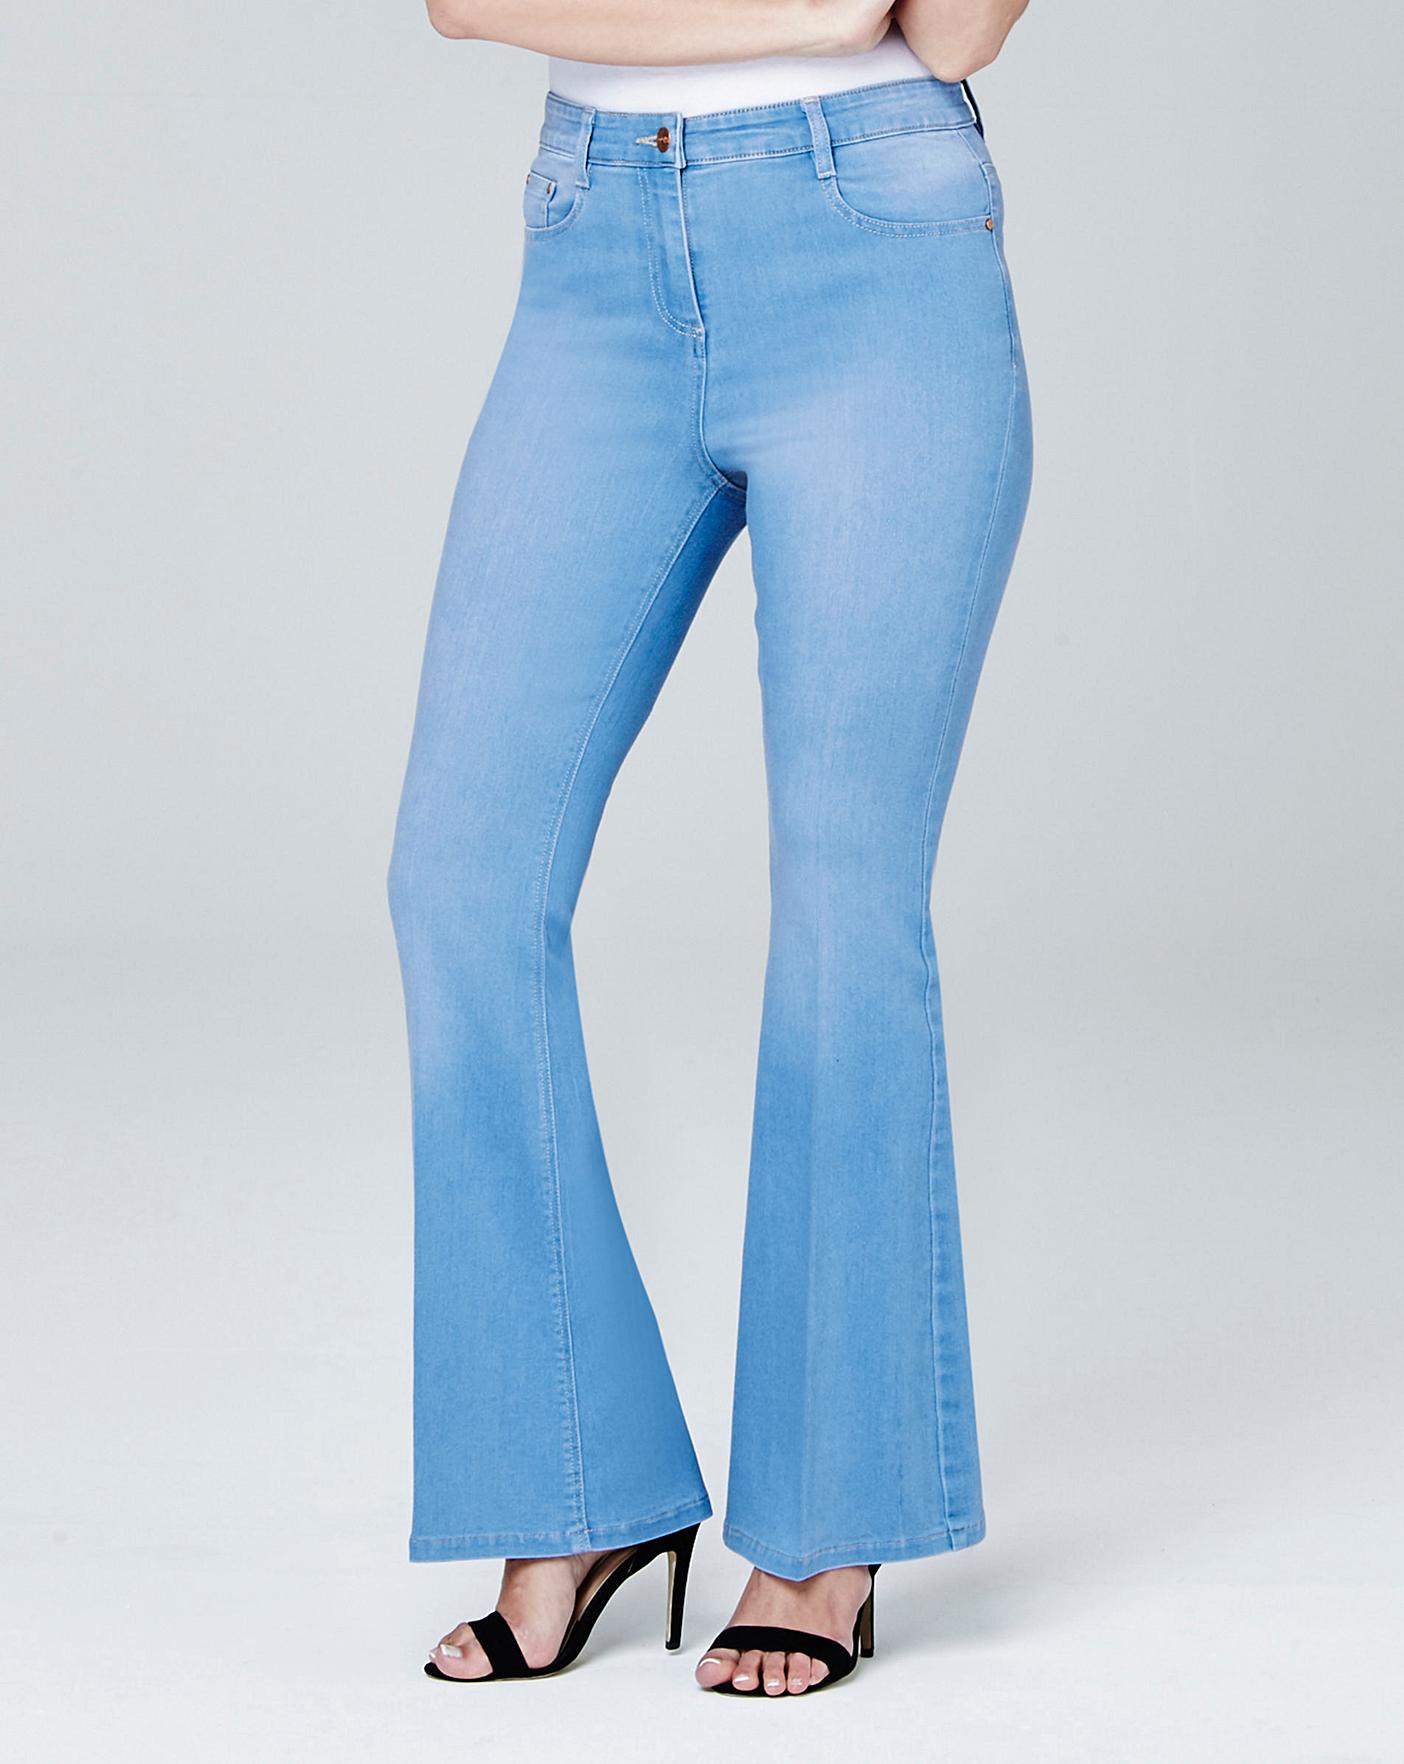 flare jeans short length